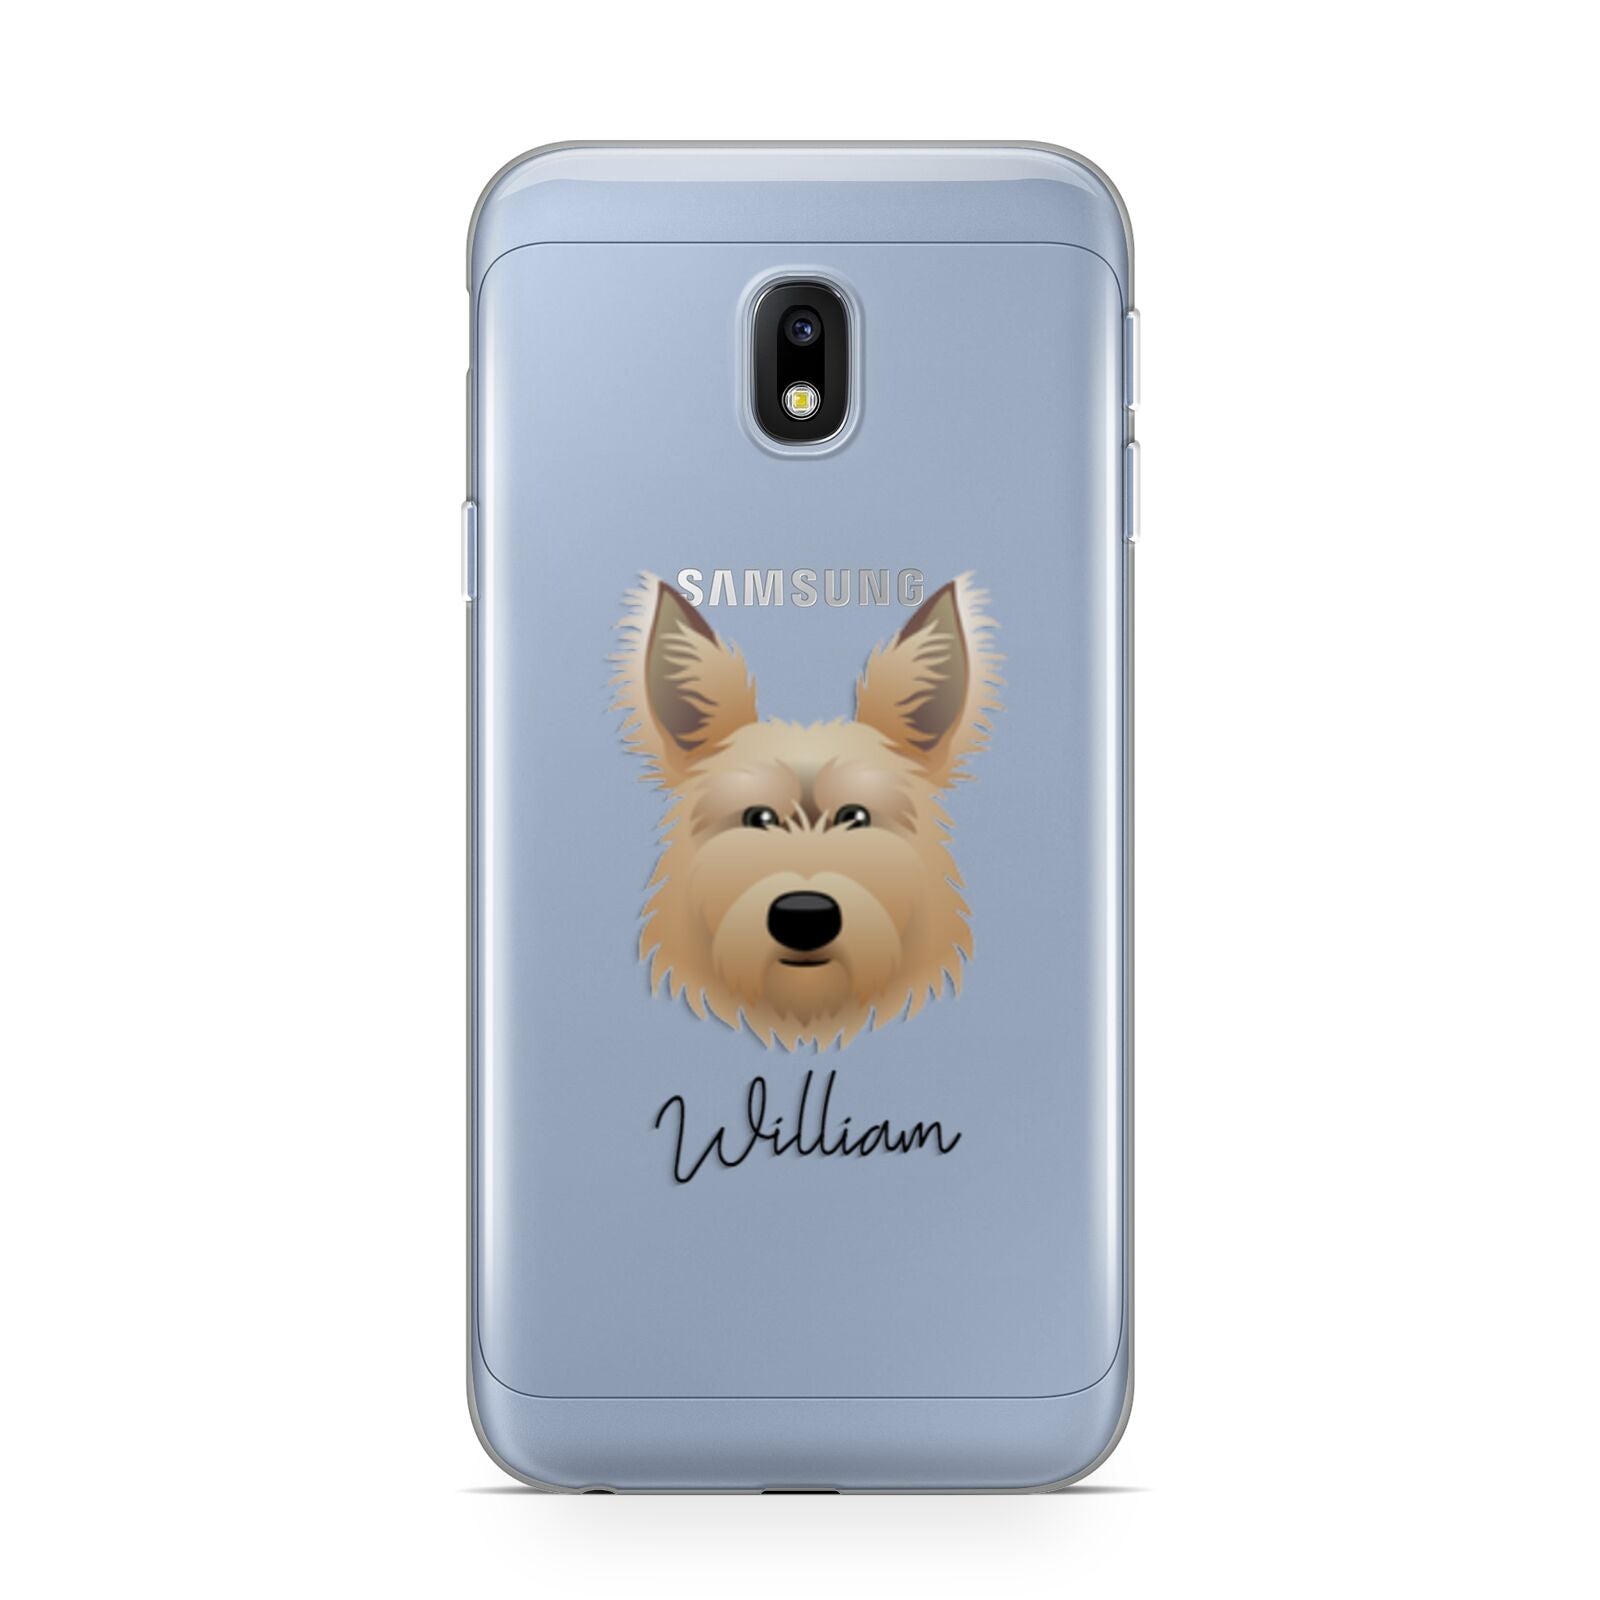 Picardy Sheepdog Personalised Samsung Galaxy J3 2017 Case